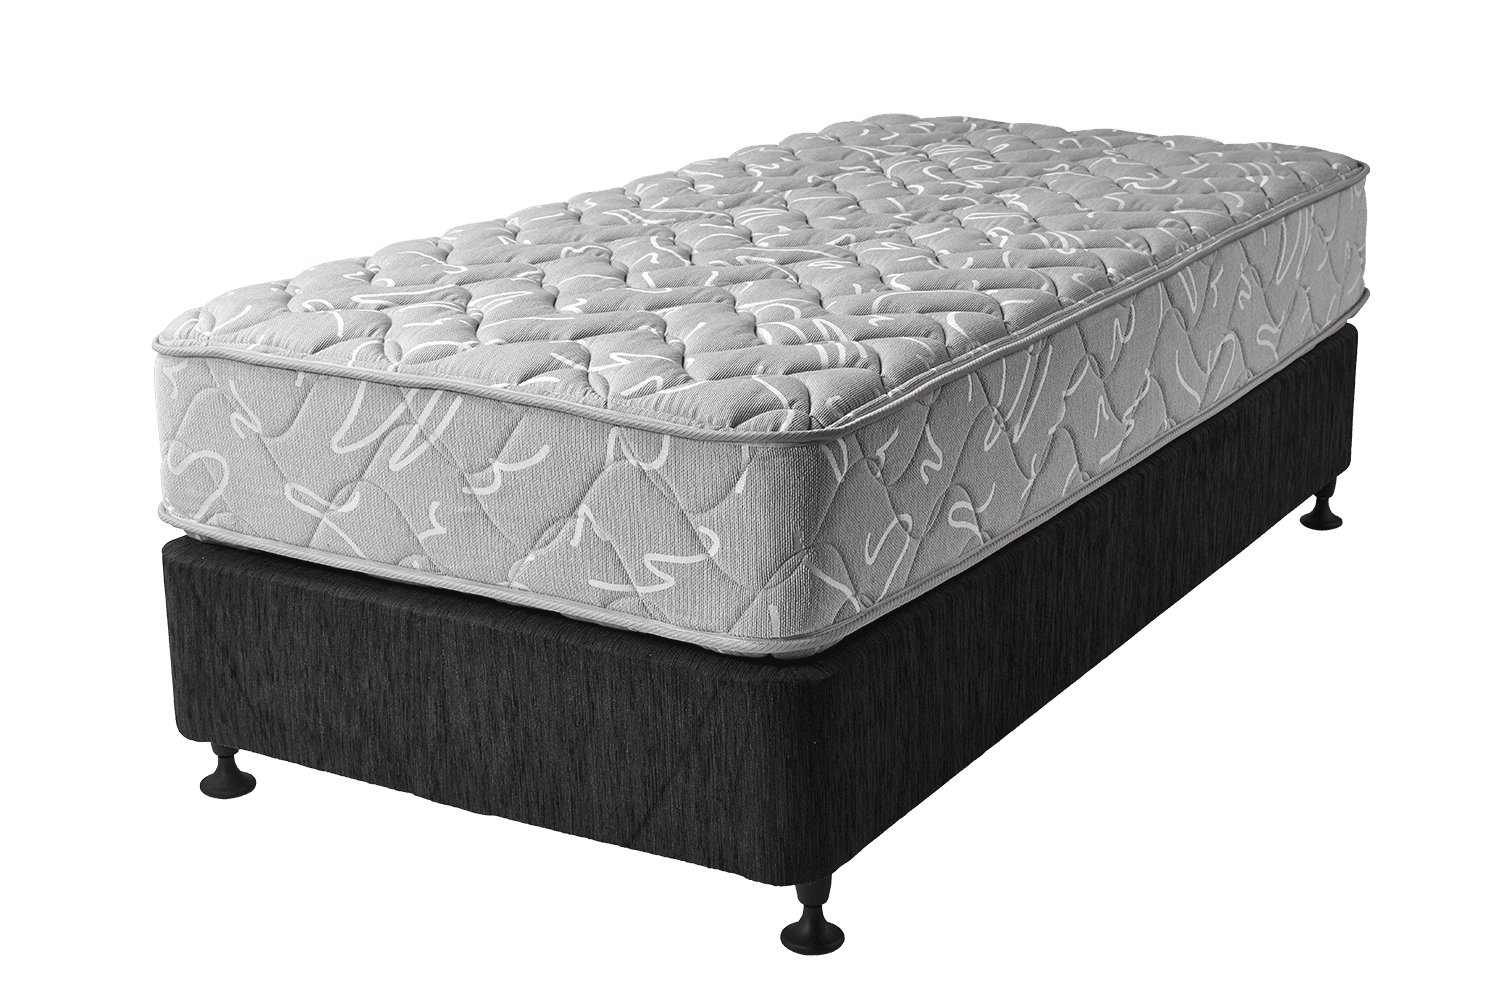 mattresses for sale on internet